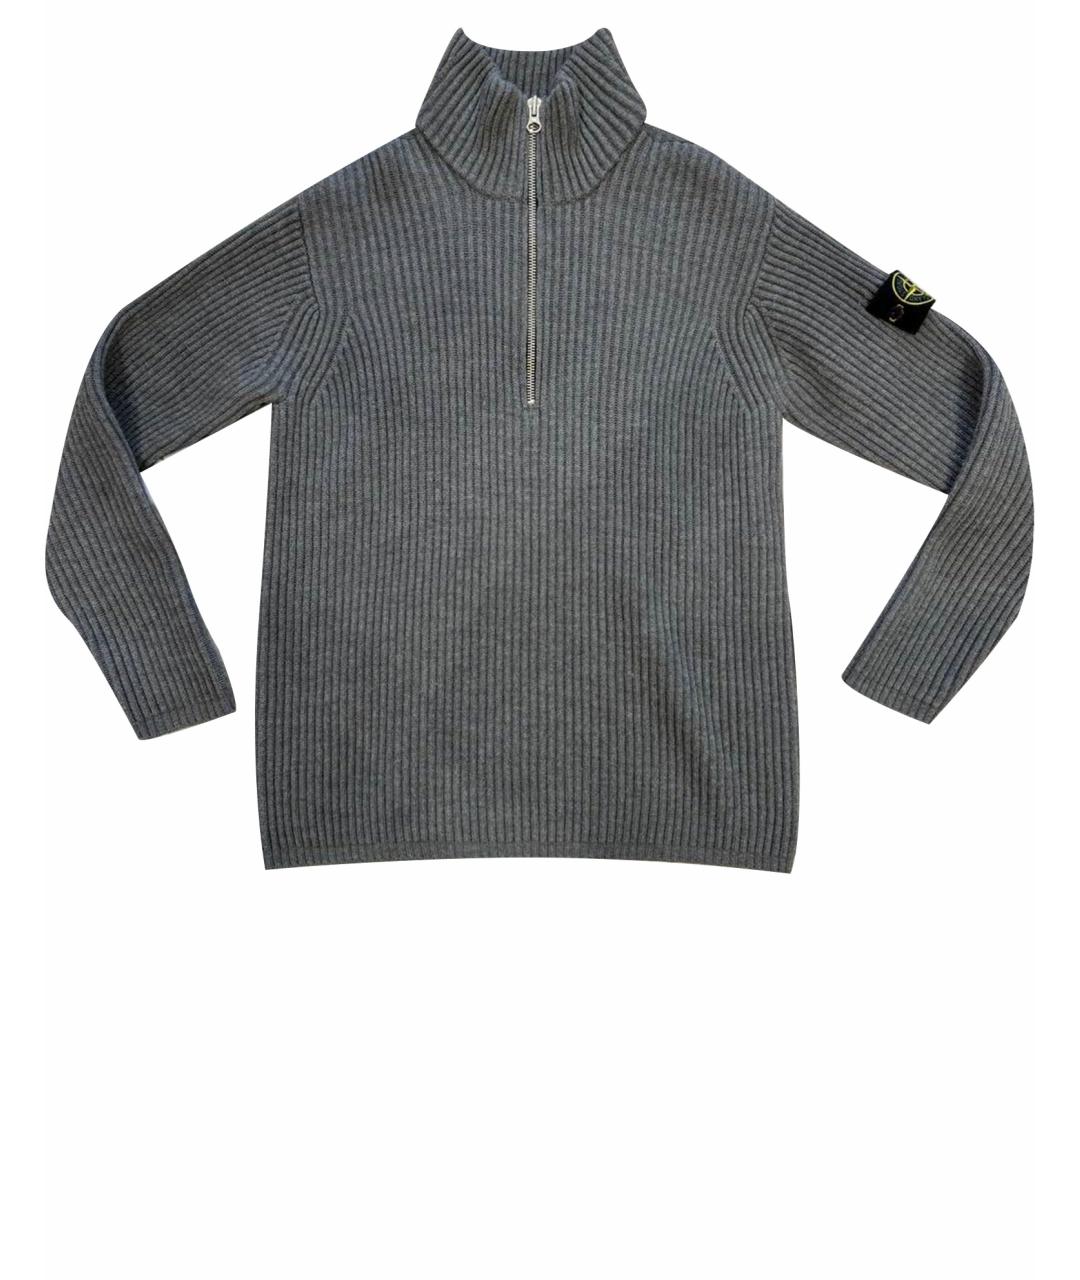 STONE ISLAND Серый шерстяной джемпер / свитер, фото 1